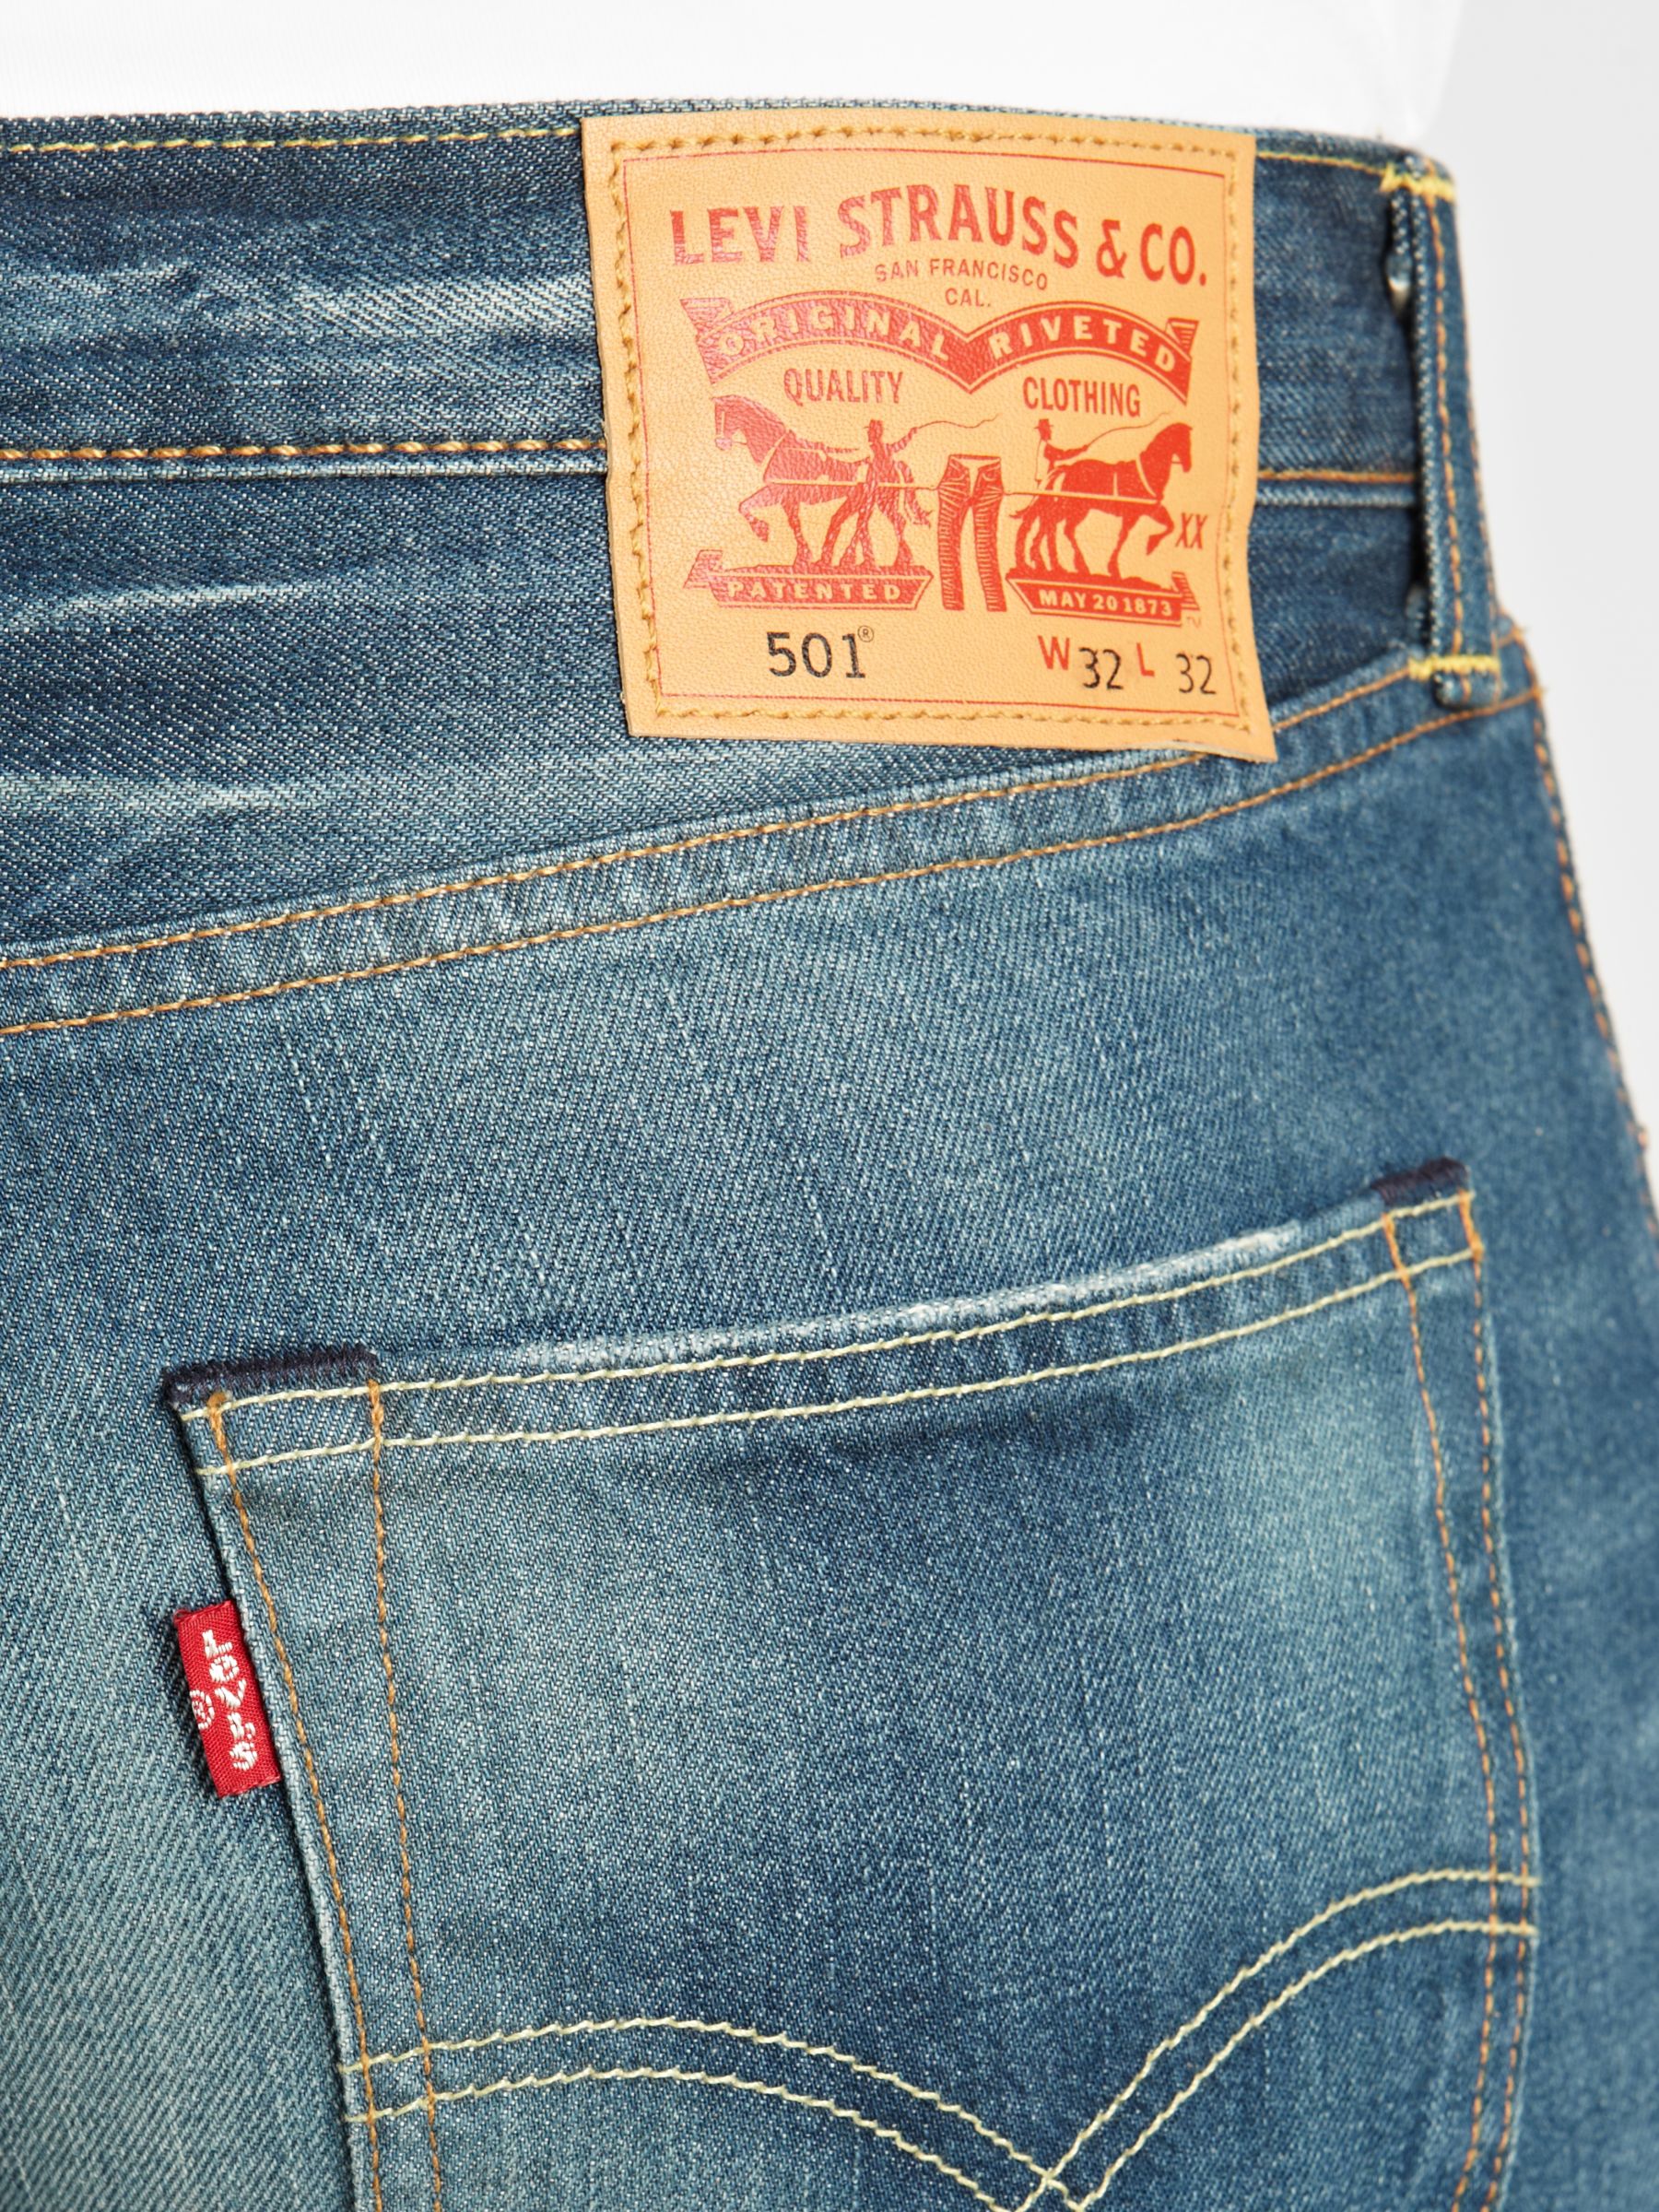 jeans levi strauss 501 original